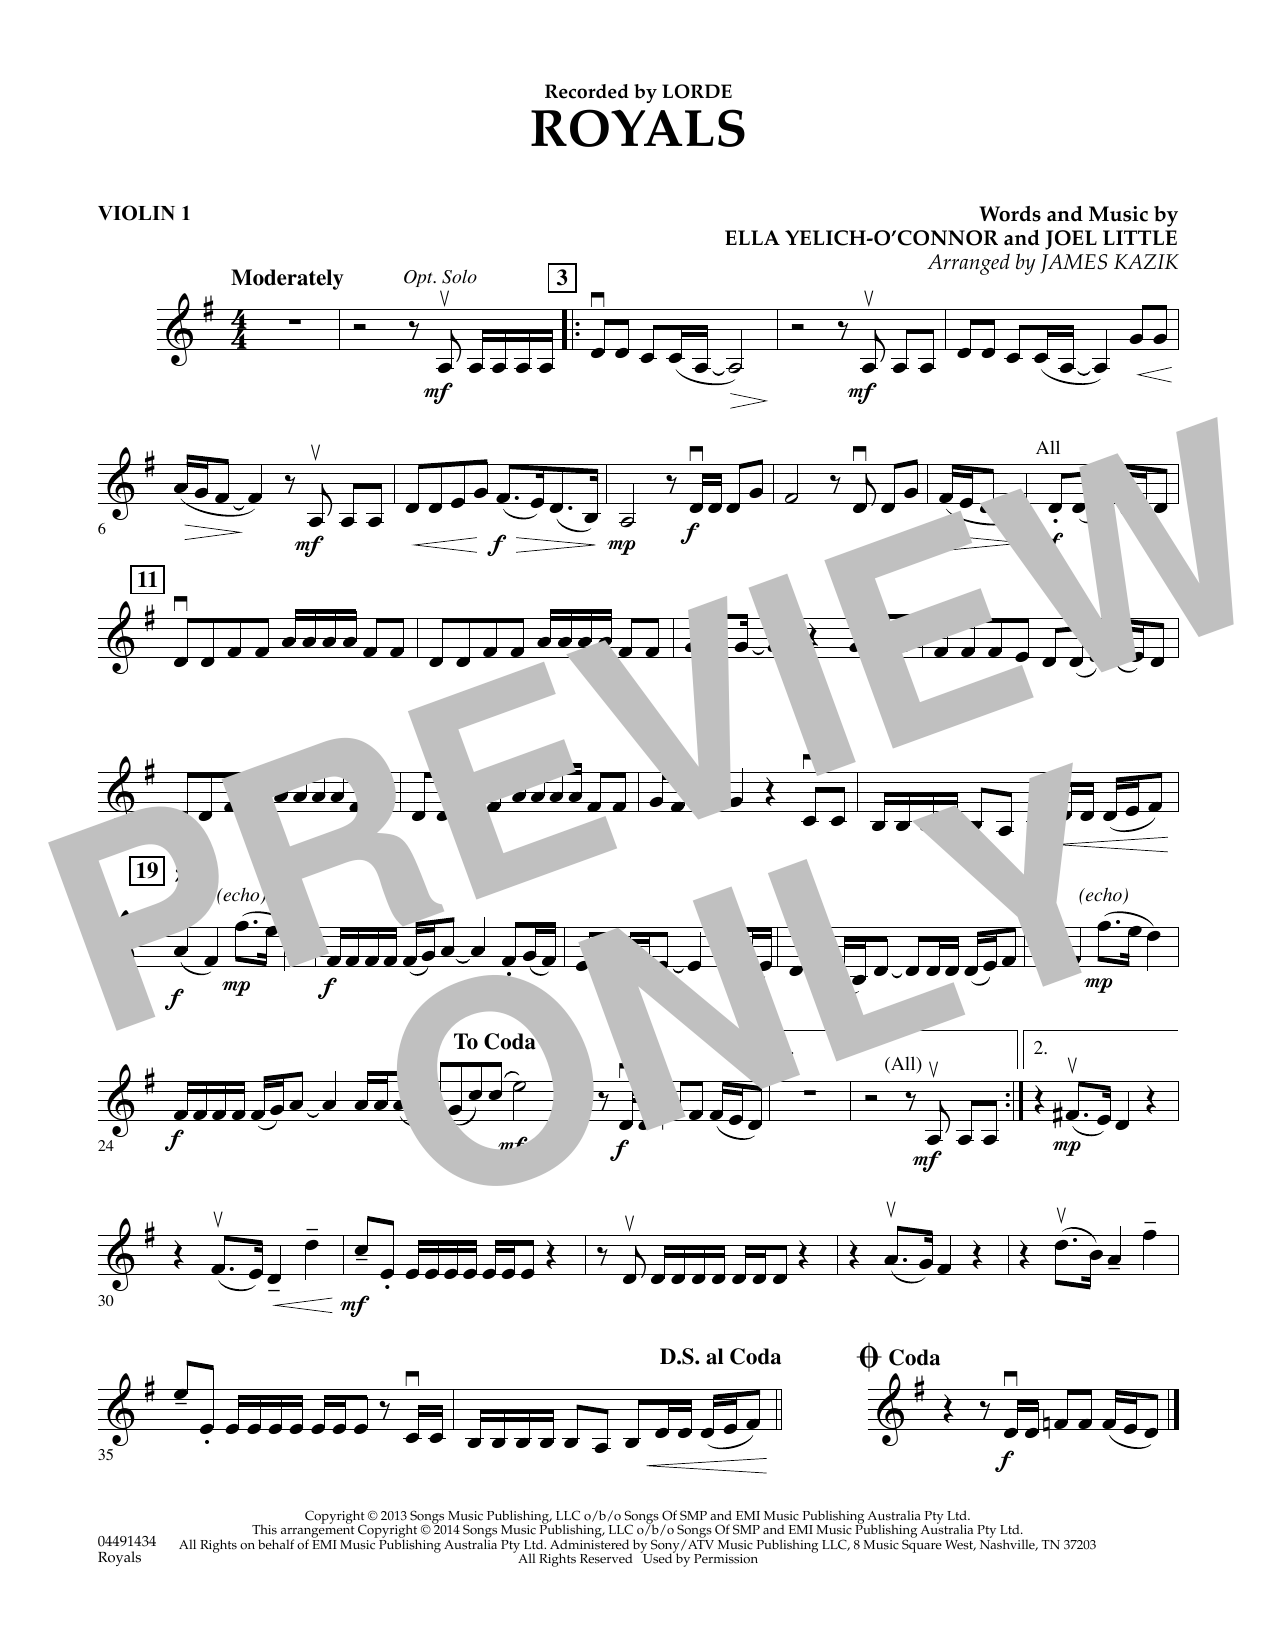 James Kazik Royals - Violin 1 Sheet Music Notes & Chords for Orchestra - Download or Print PDF